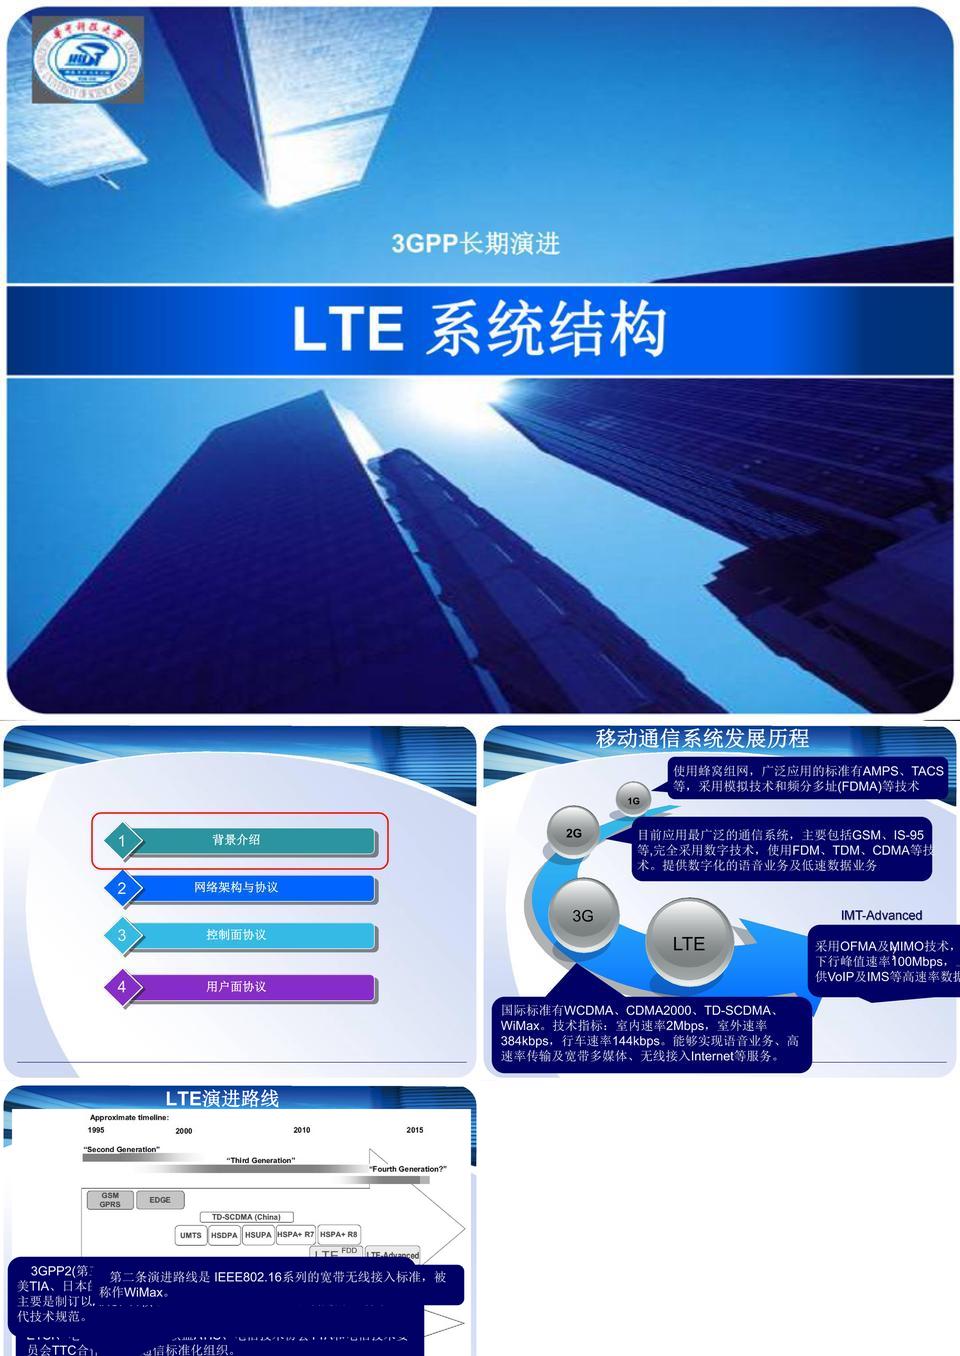 LTE 系统结构